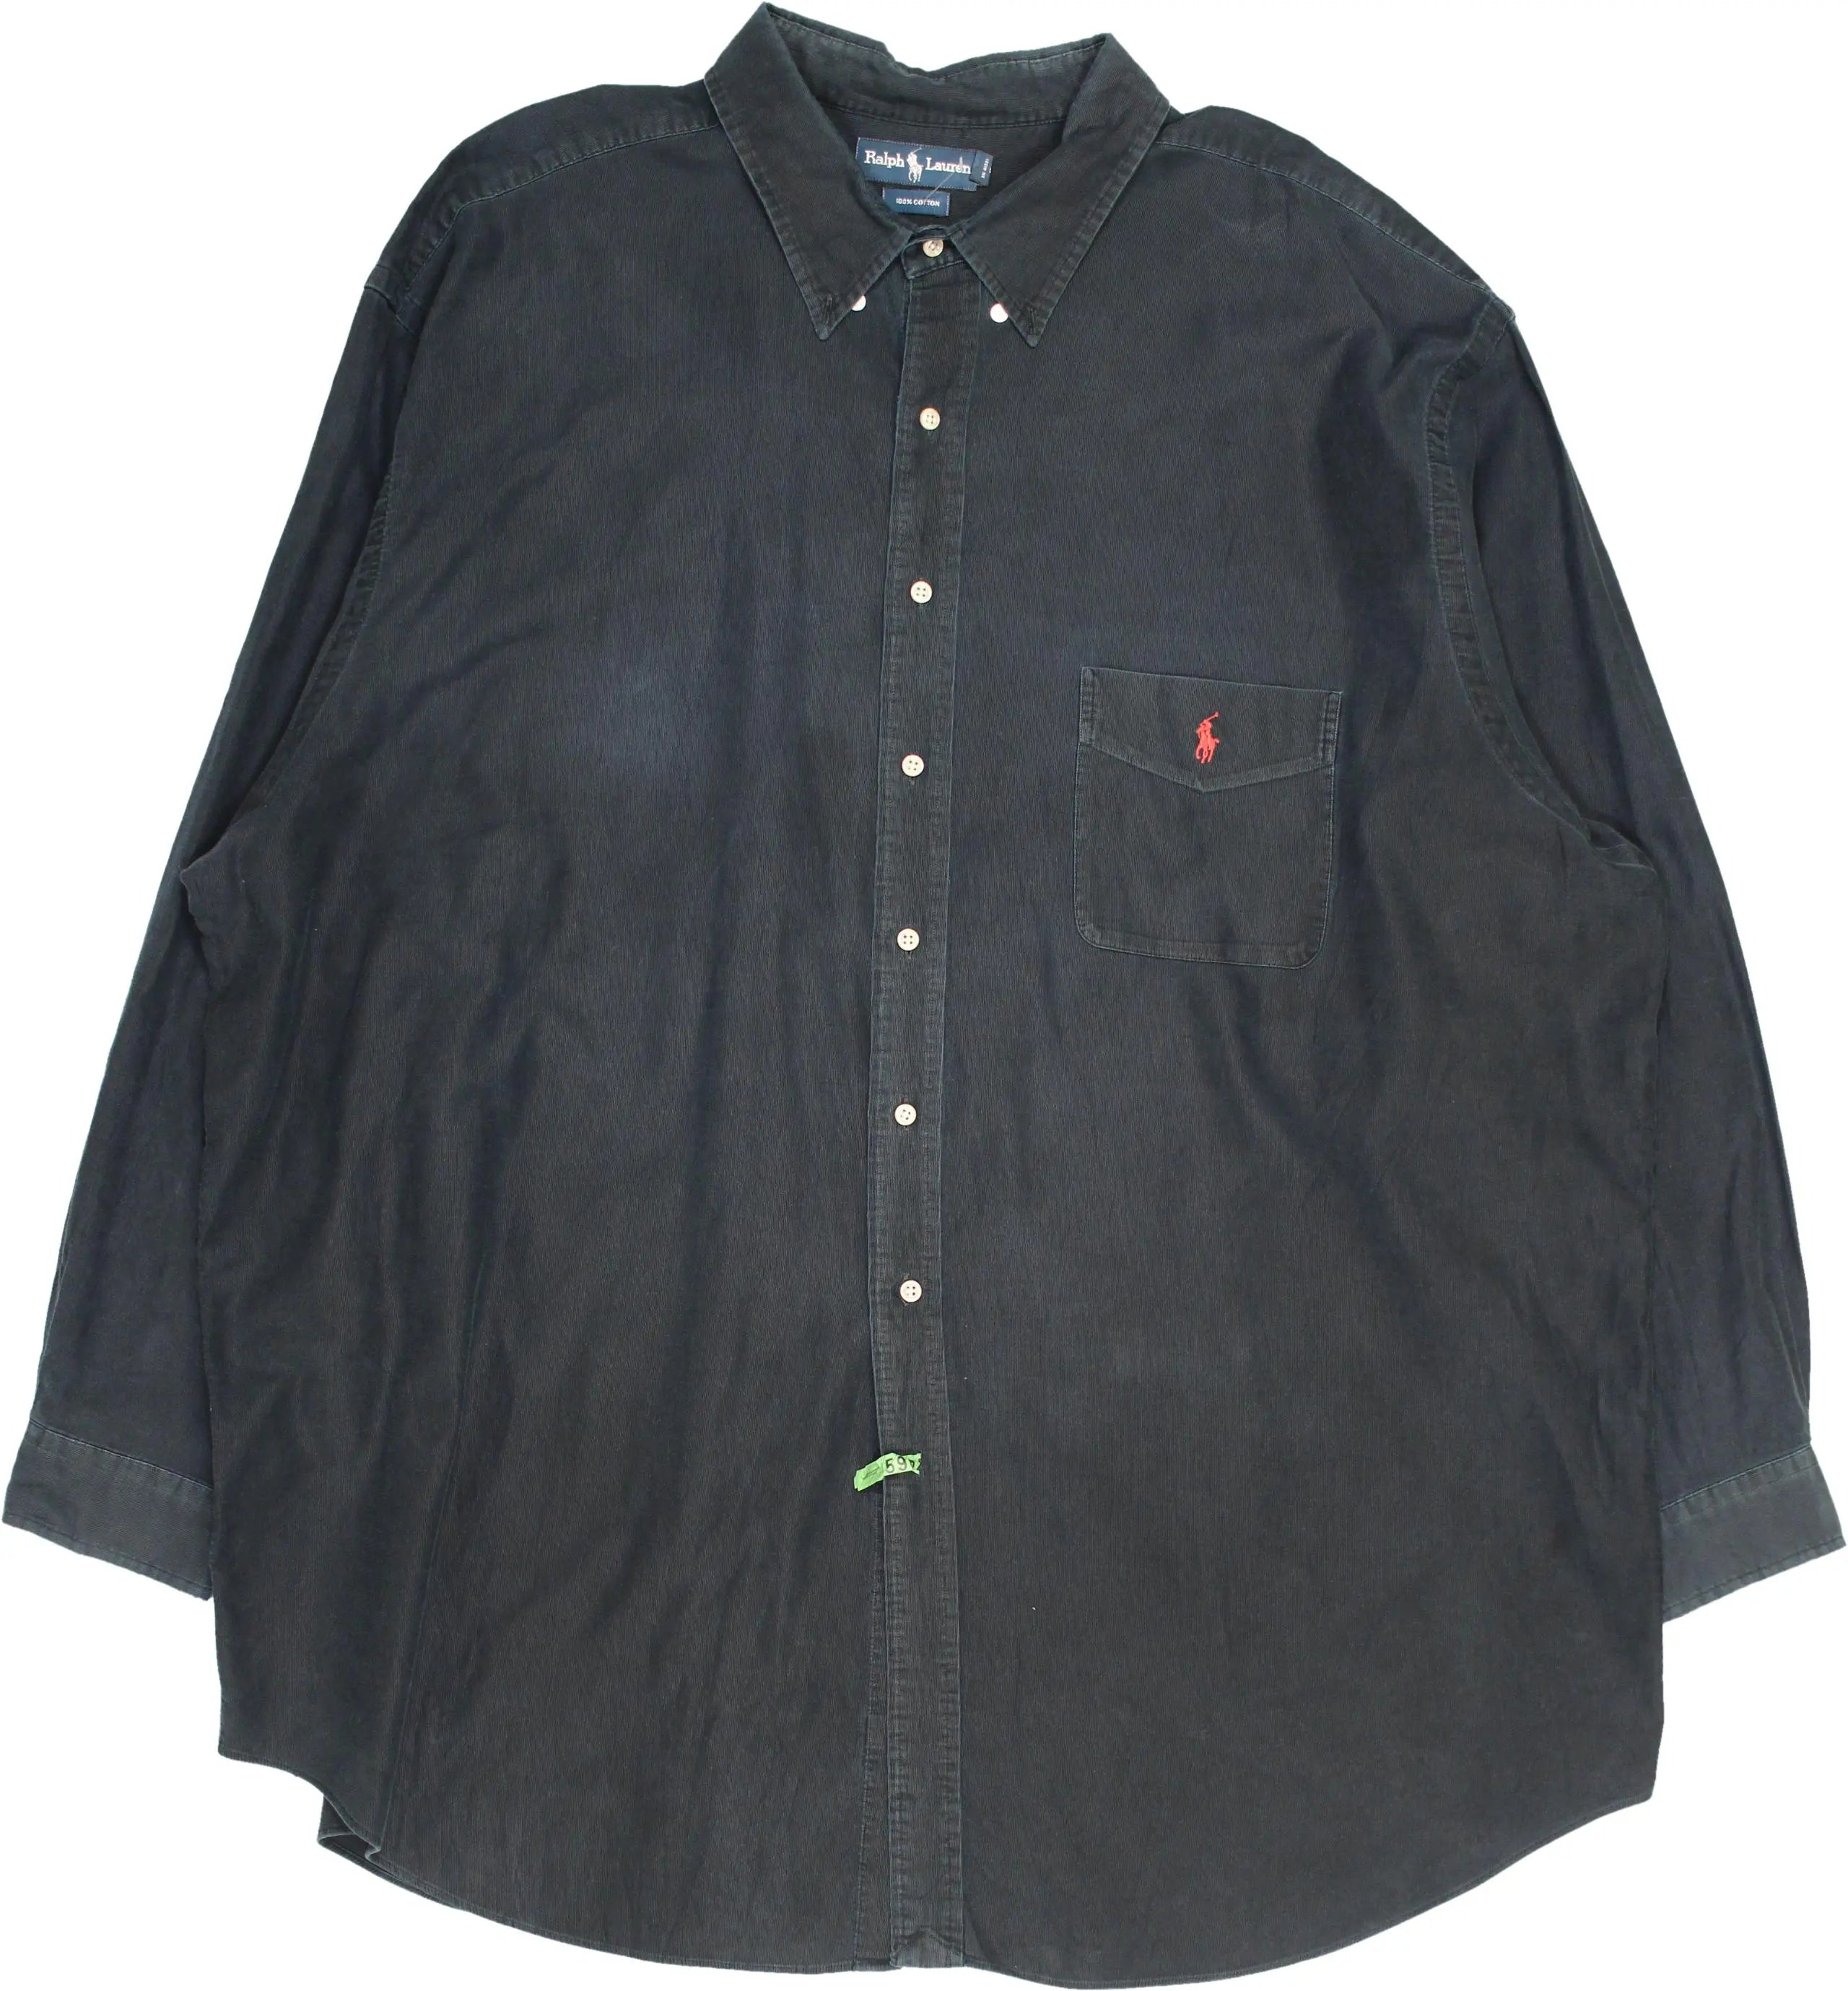 Ralph Lauren - Shirt- ThriftTale.com - Vintage and second handclothing